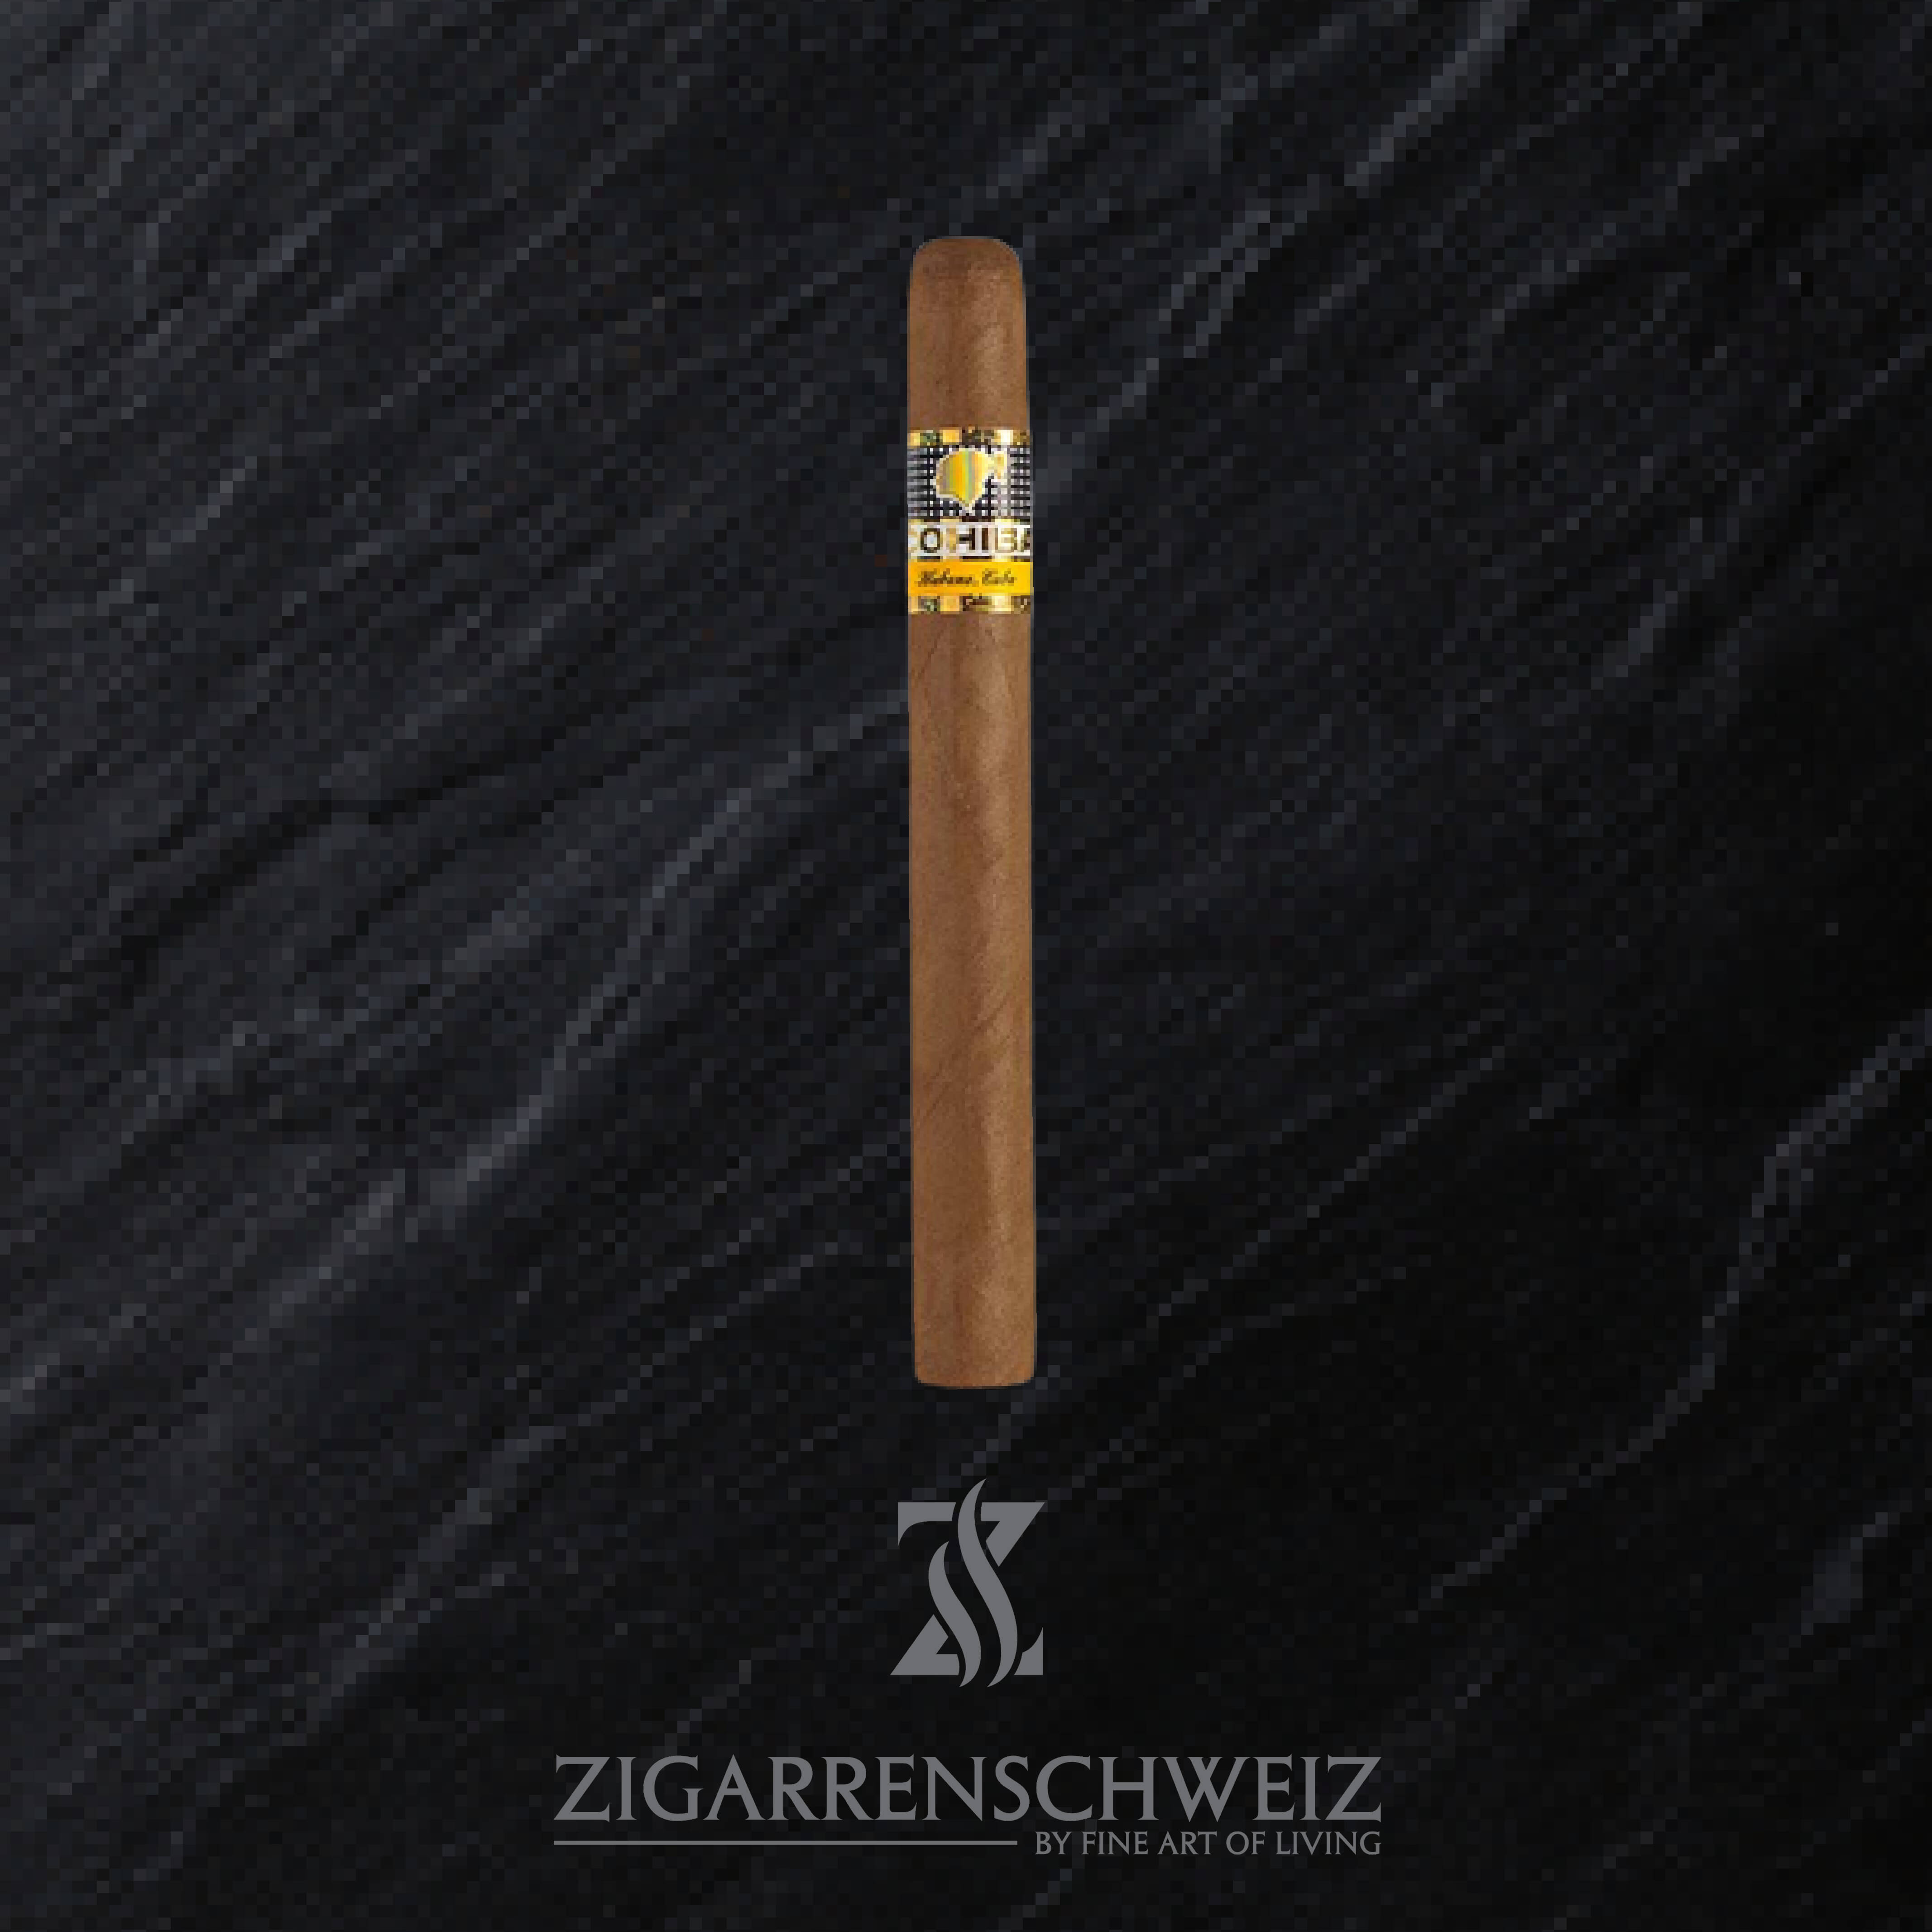 Cohiba Siglo V (5) Zigarre der Cohiba Linea 1492